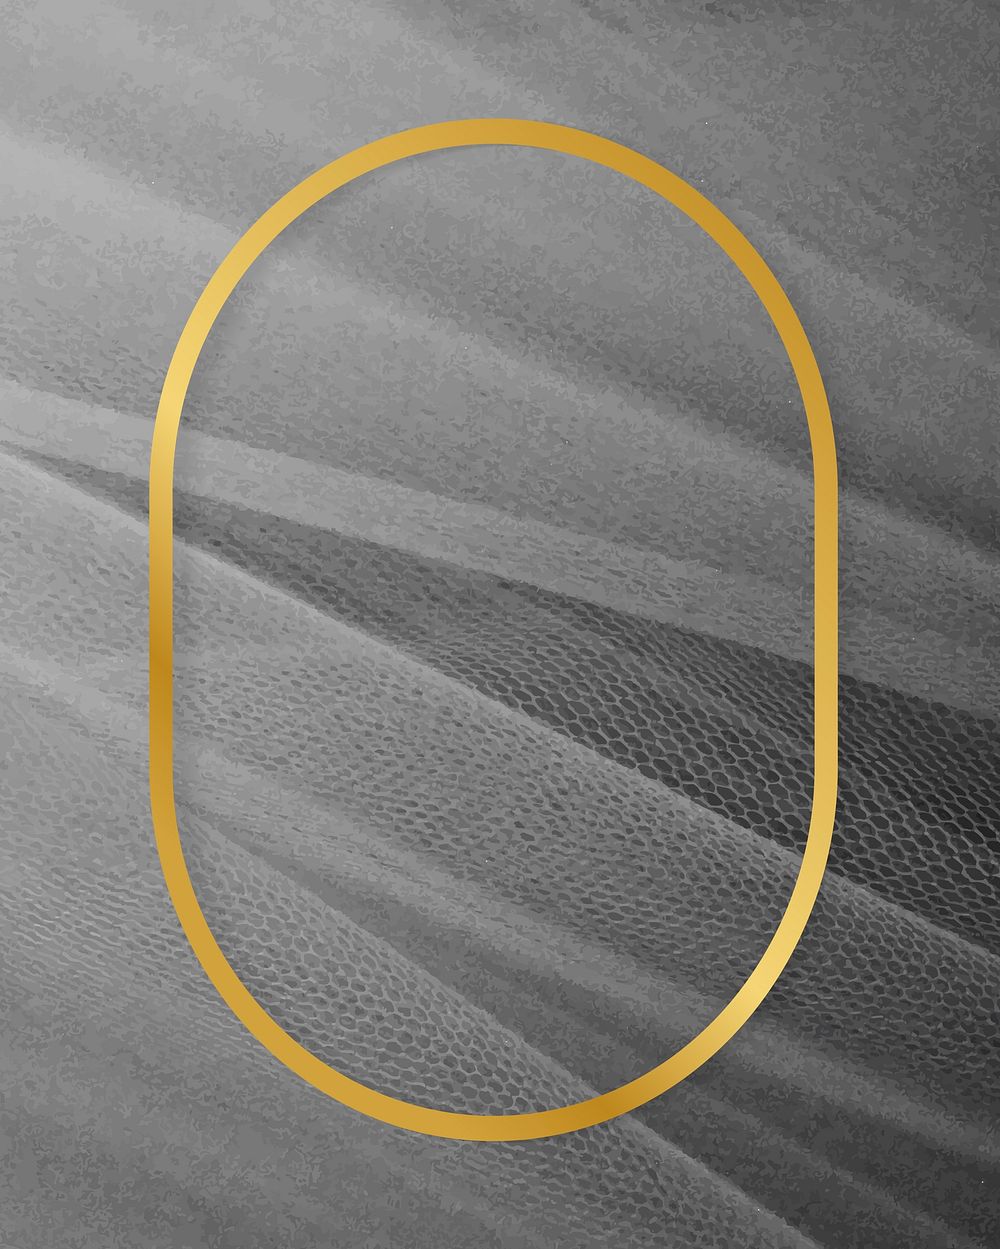 Golden framed oval on a gray mesh textured vector